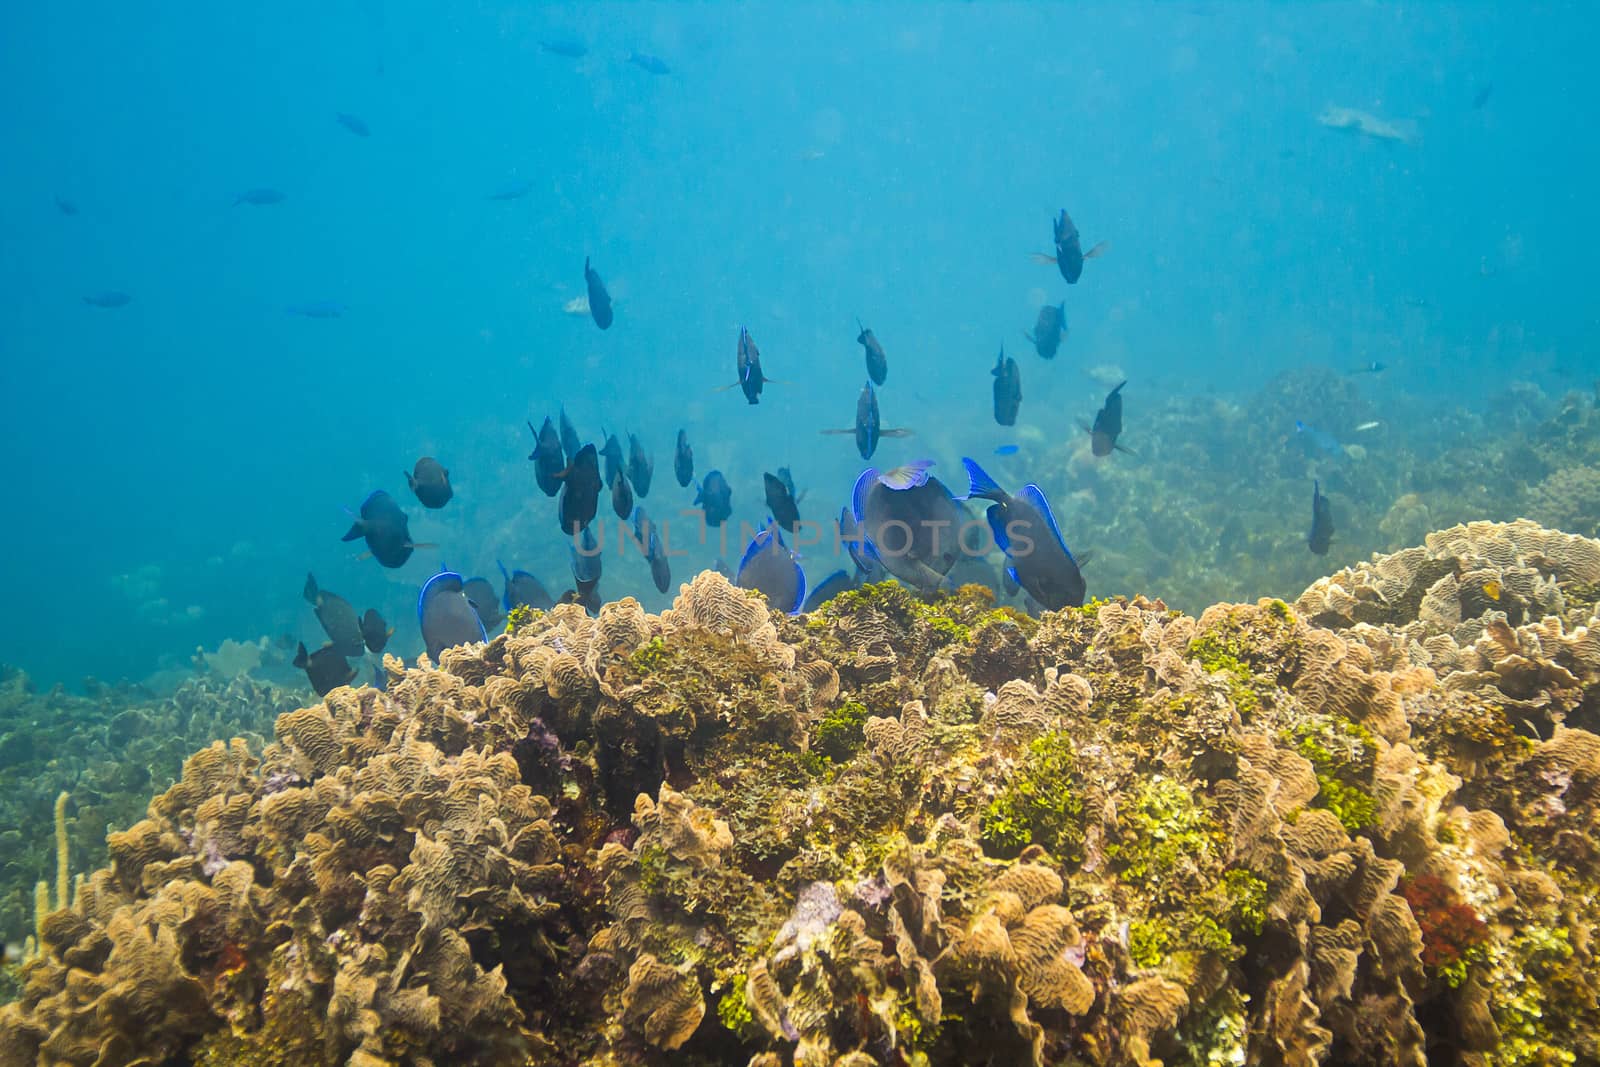 School of blue tan swimming aways in a reef